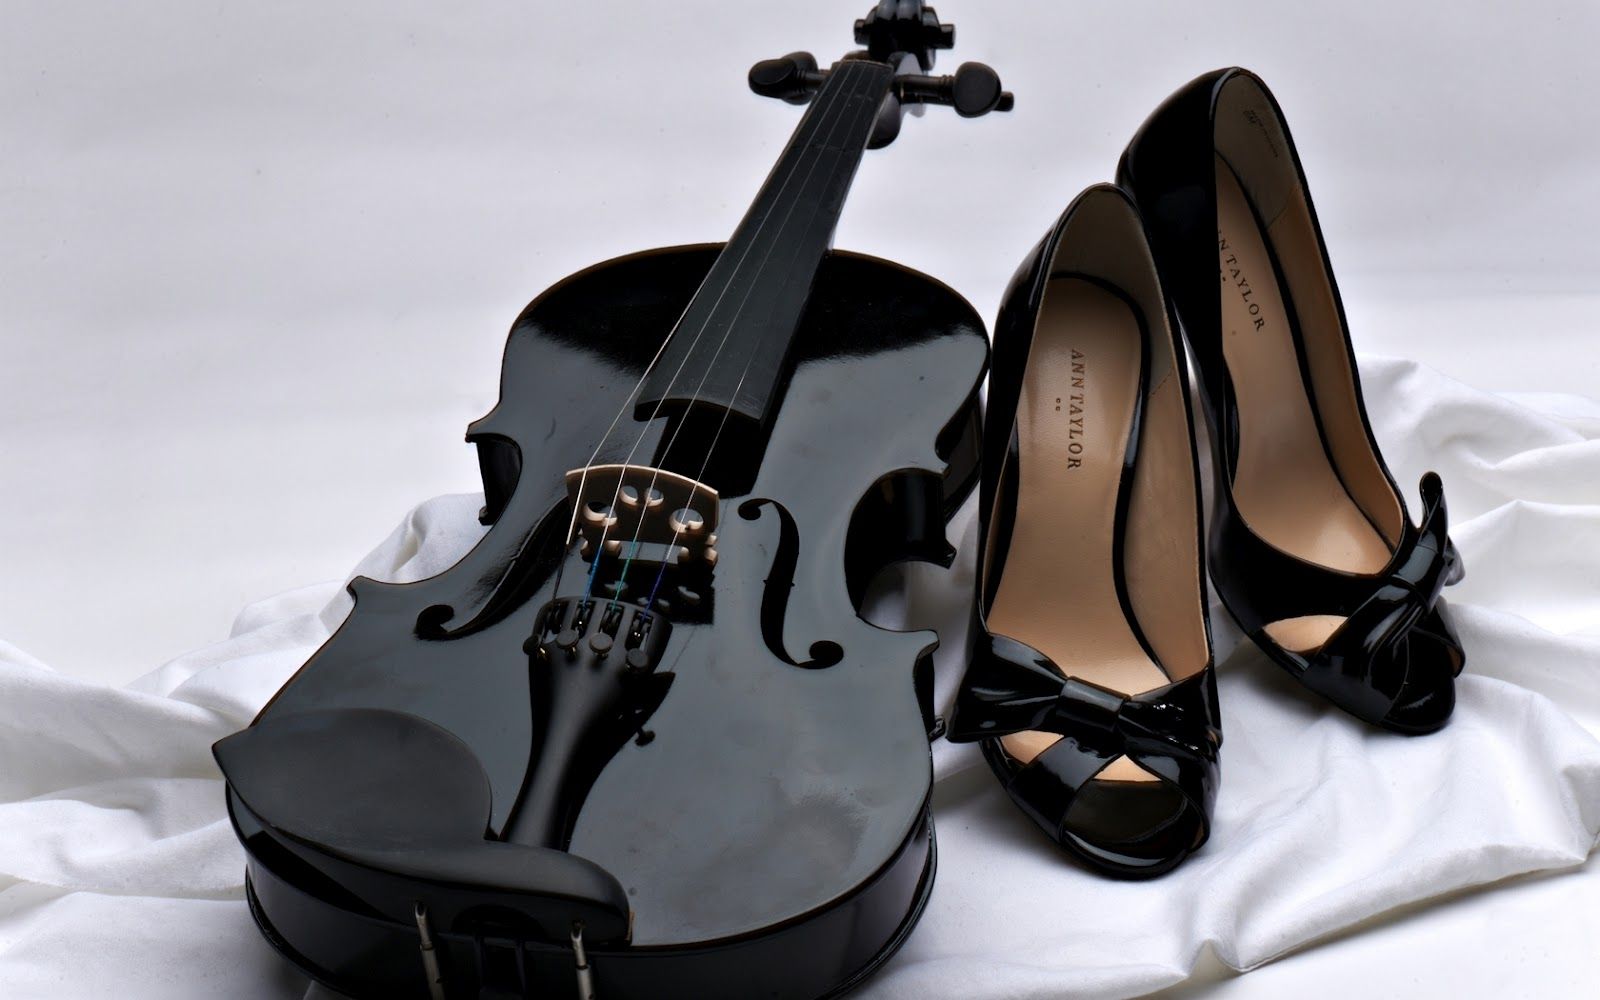 Download HD Wallpaper: Black Violin and Woman Shoes on White Sheet HD Wallpaper